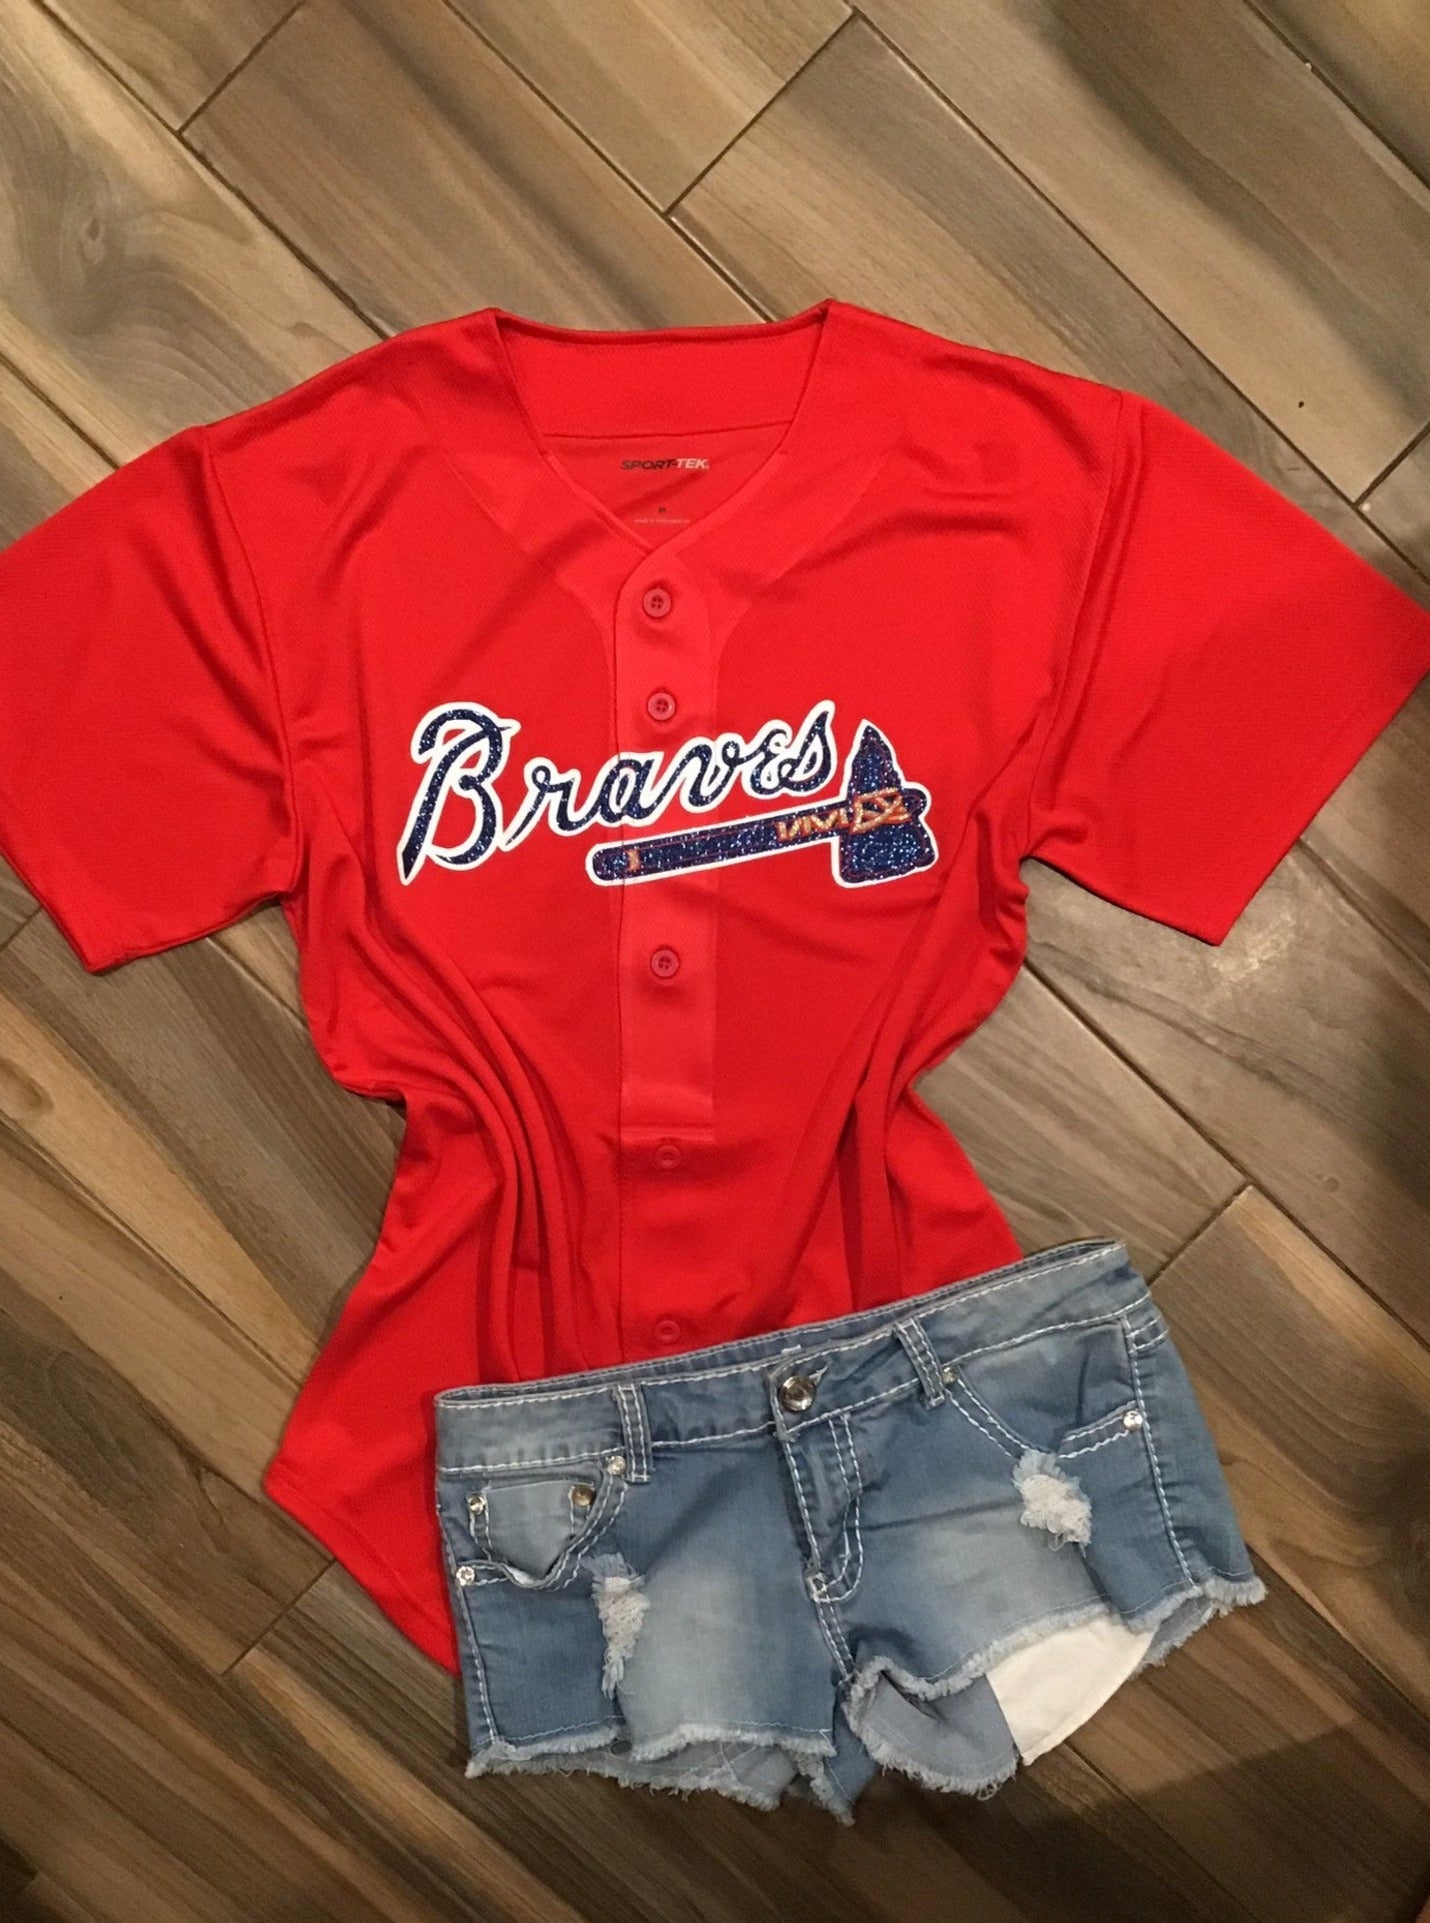 Atlanta Braves - Who's rockin' their Braves gear today? Show us